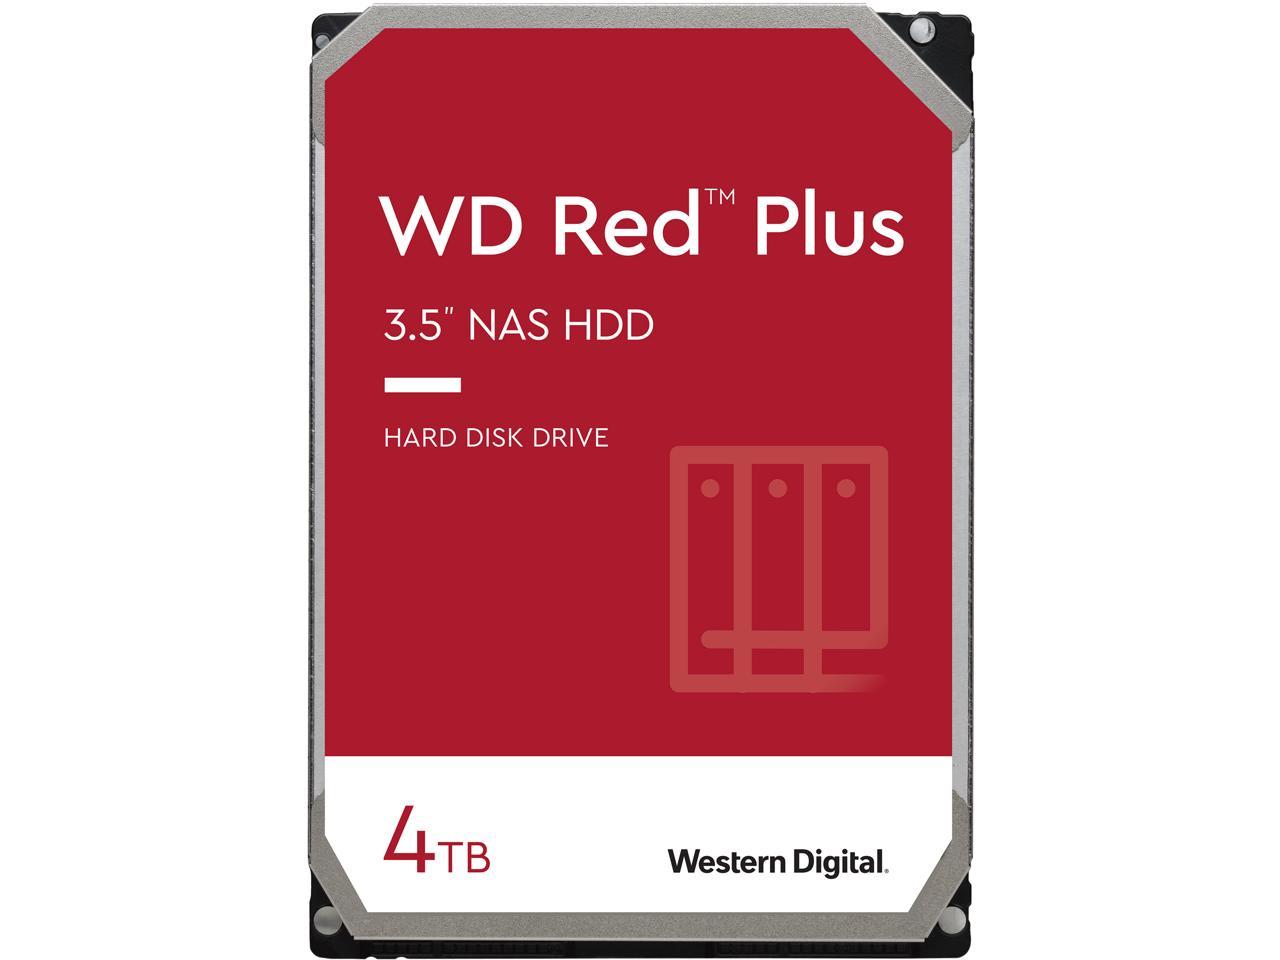 4TB WD Red Plus NAS Hard Drive $69